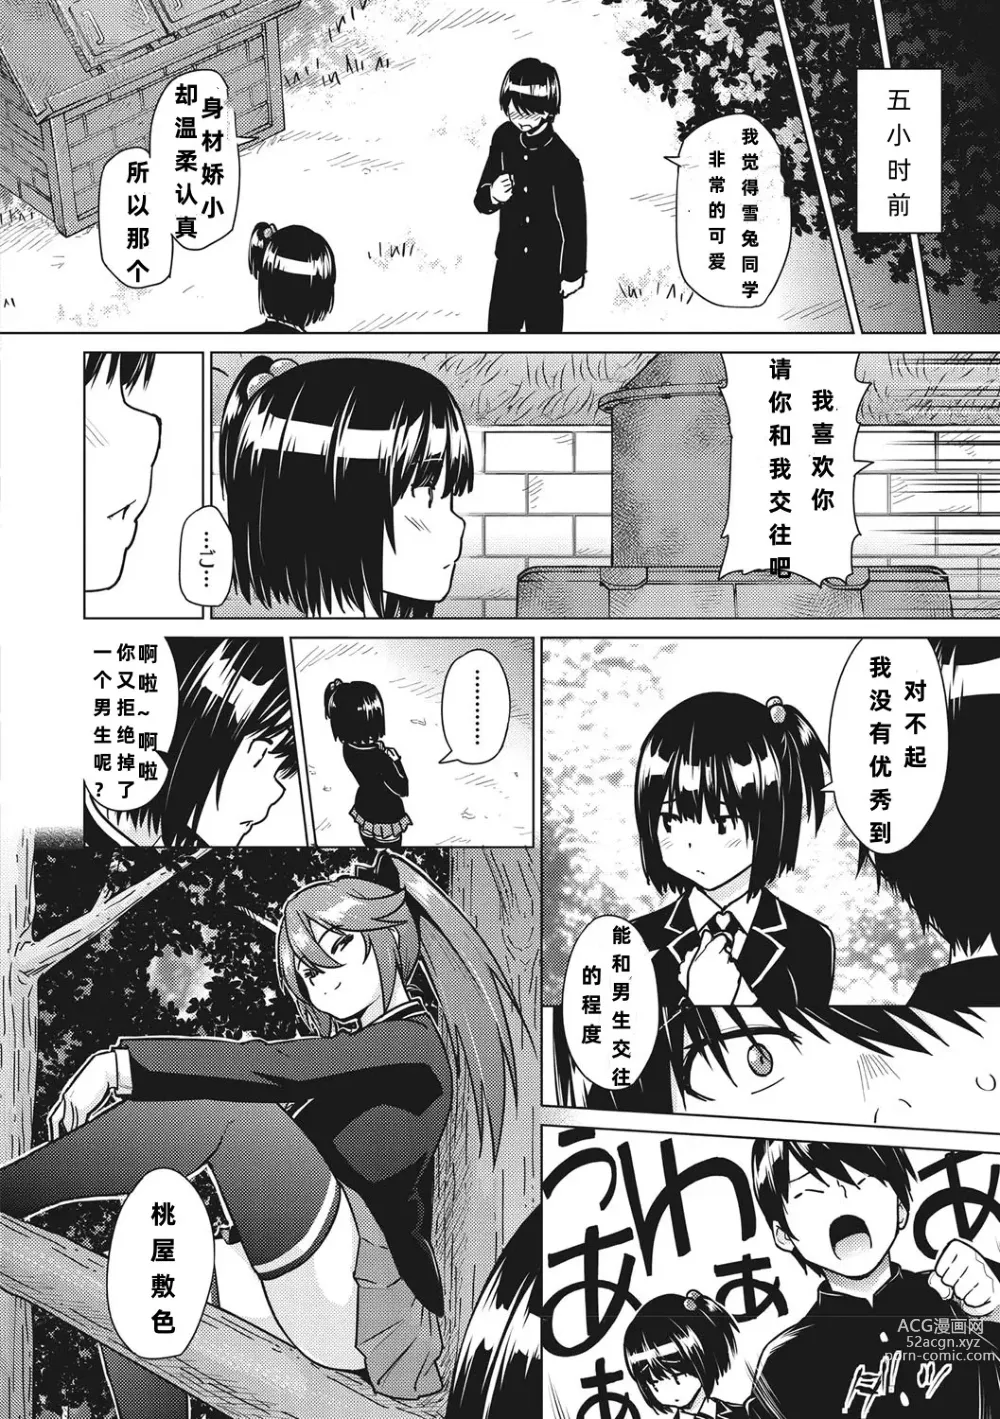 Page 3 of manga SocceMana Overcome